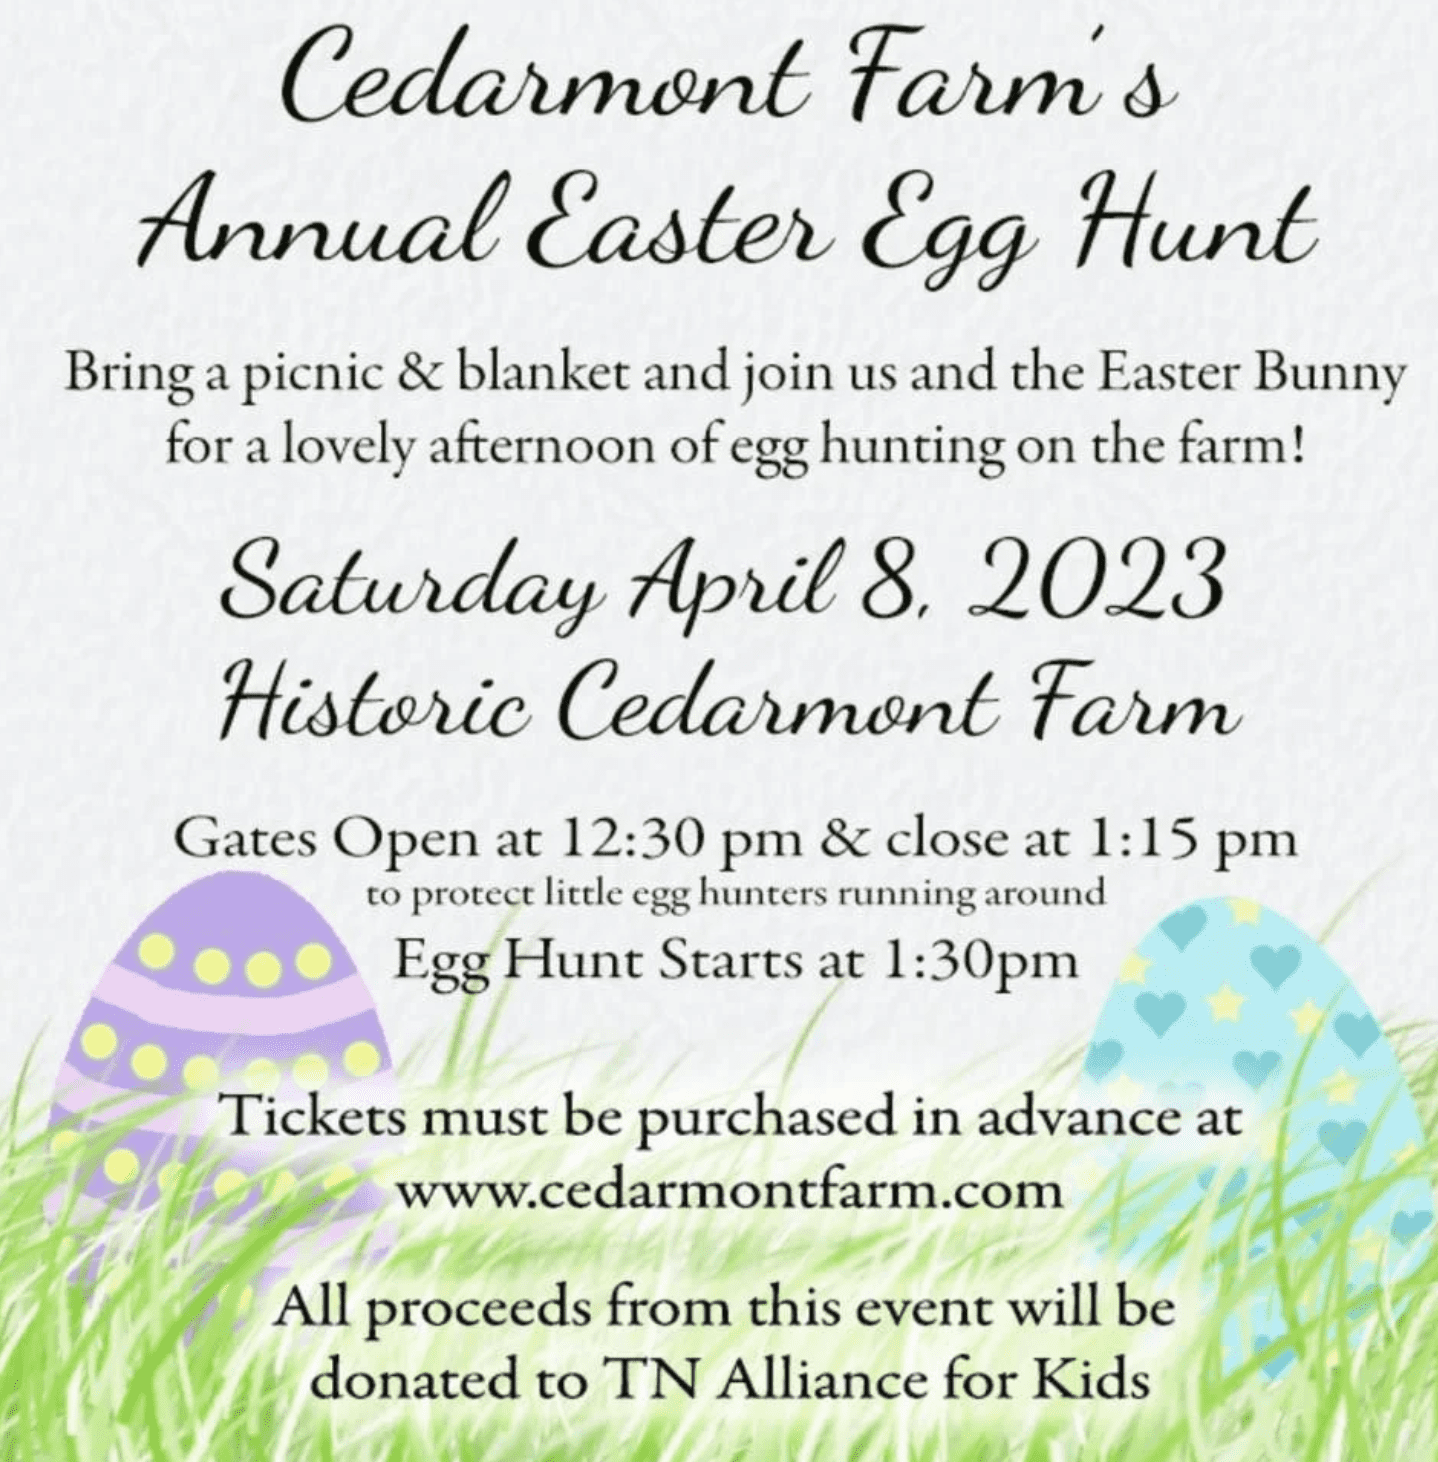 Cedarmont Farm Easter Egg Hunt in Franklin, TN.